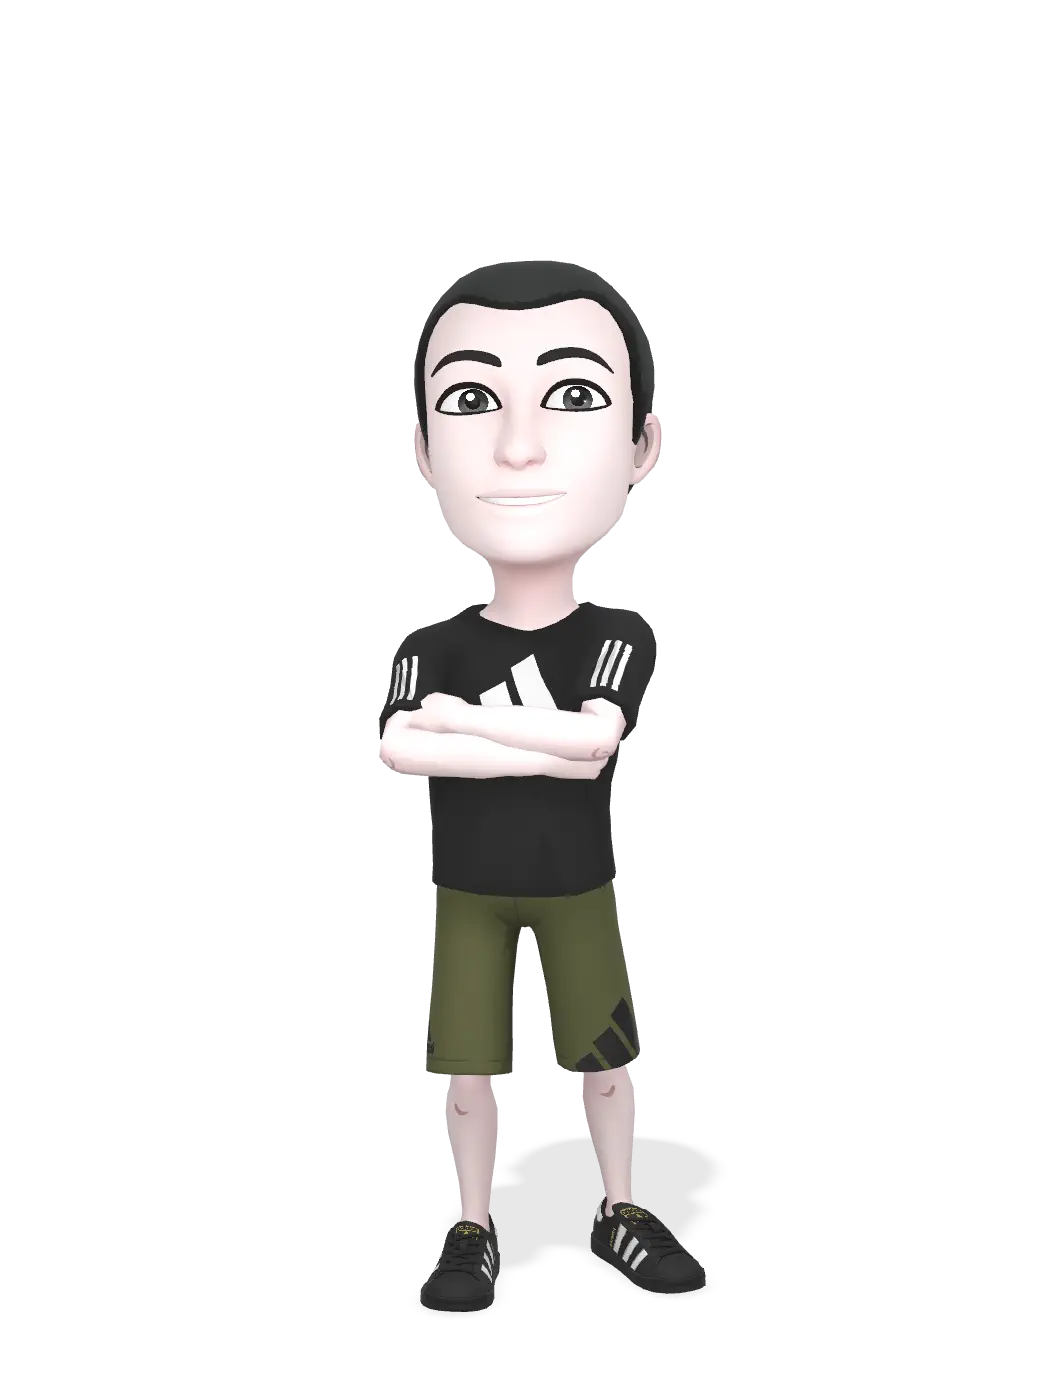 3D Bitmoji for sjynlgrbh202628 avatar